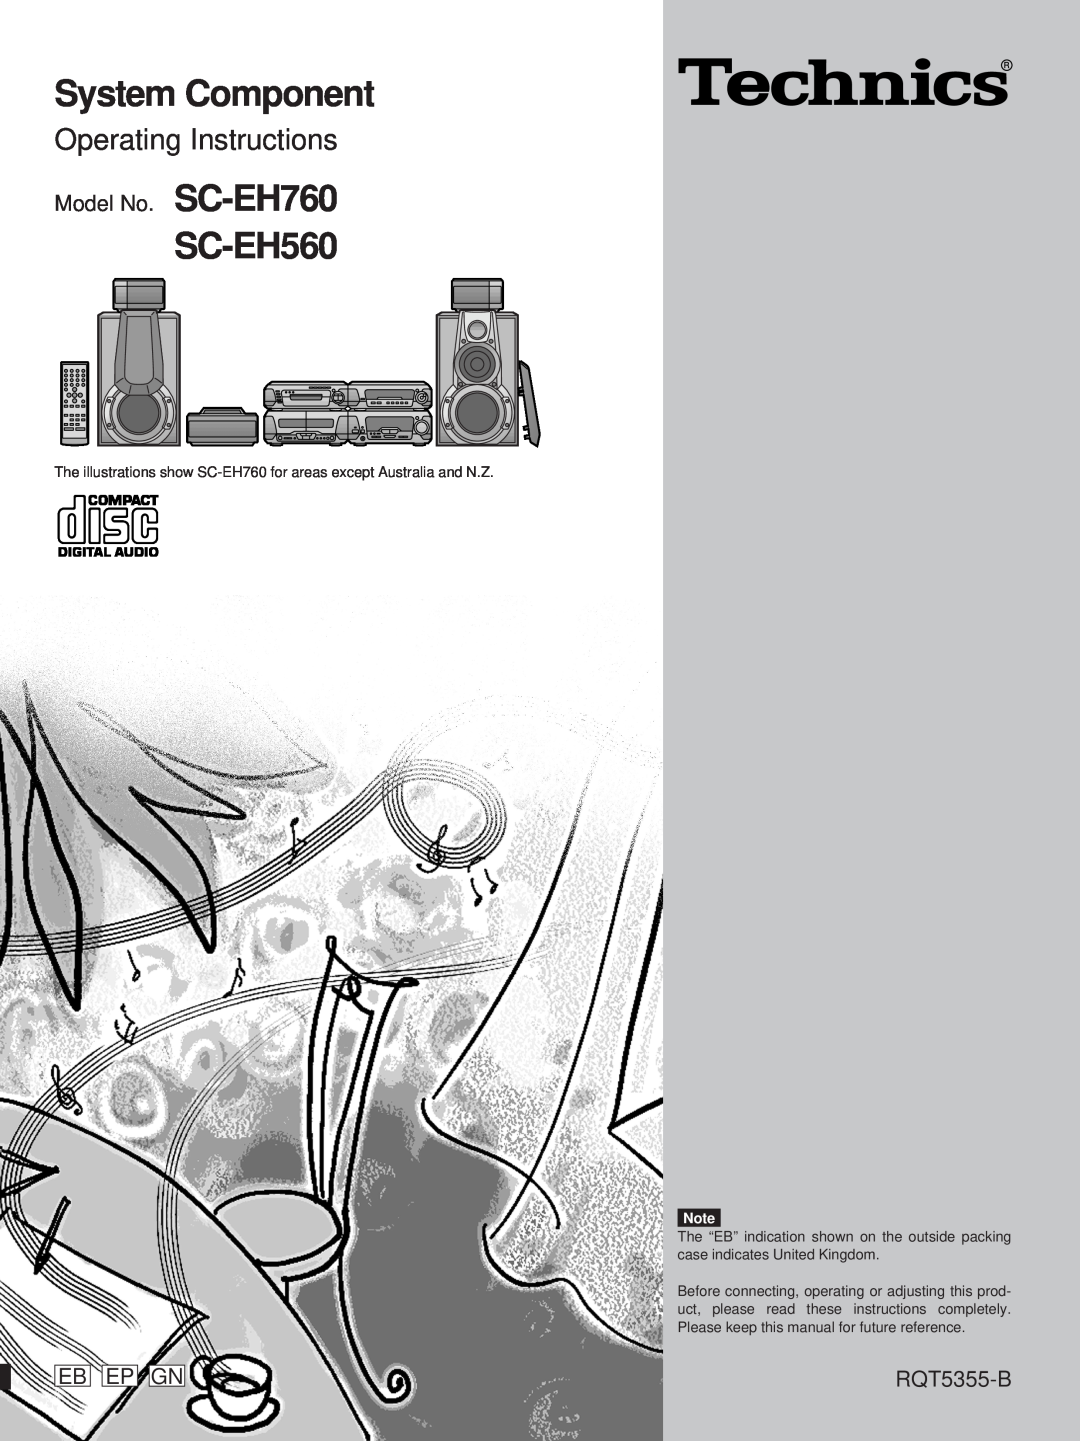 Technics SC-EH560 manual Model No. SC-EH760, Eb Ep Gn, RQT5355-B, System Component, Operating Instructions 